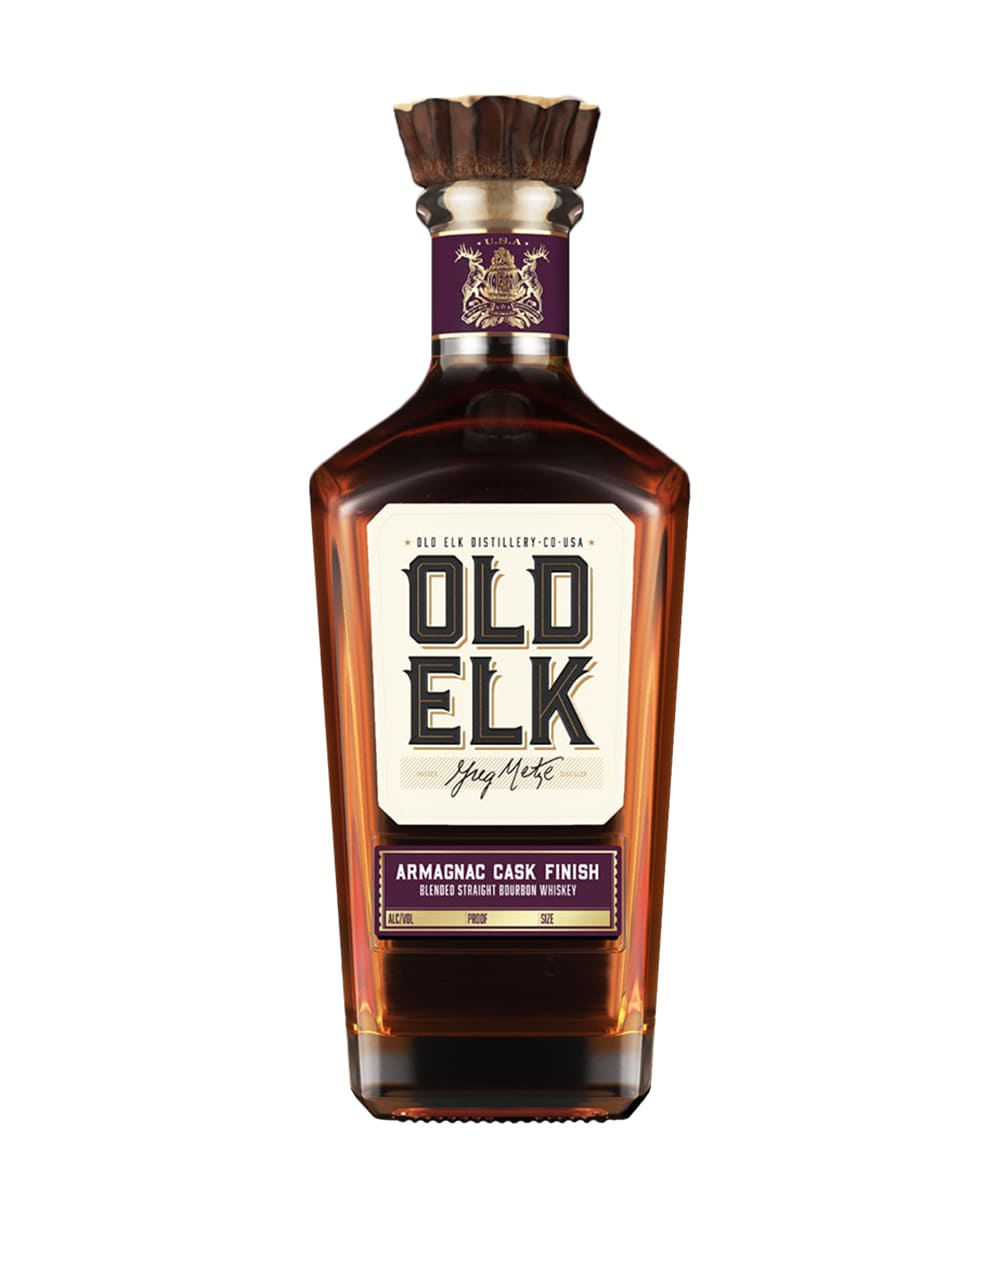 Old Elk Armagnac Cask Finish Blended Straight bourbon Whiskey